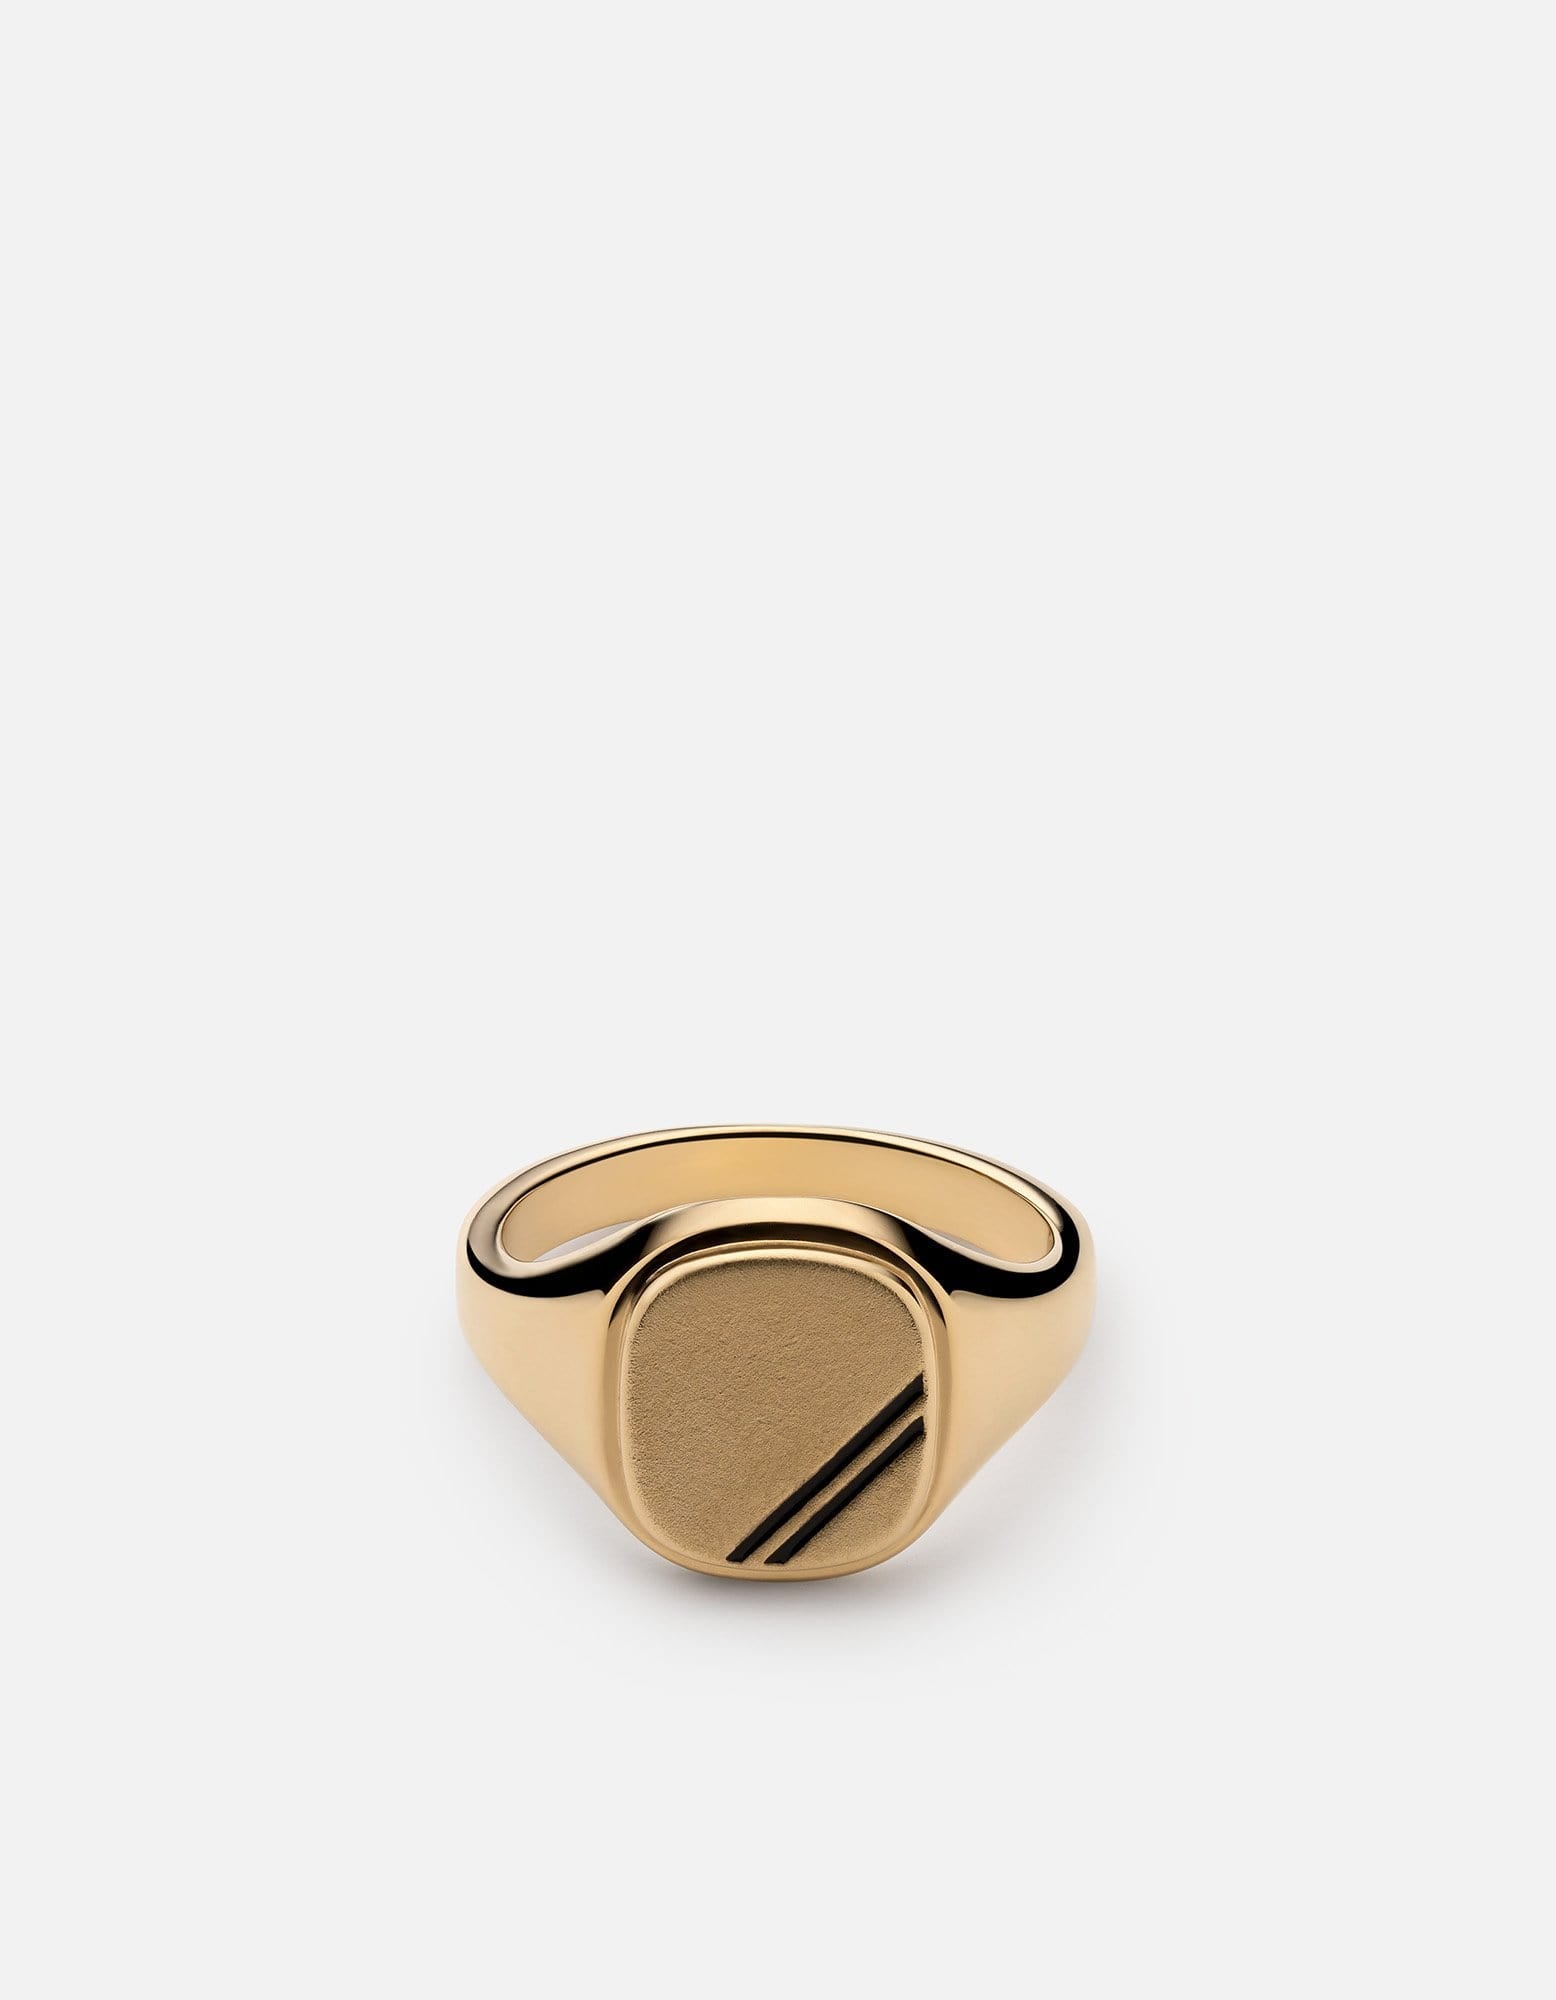 Miansai Men's Square Step Ring, Gold Vermeil/Black, Size 8